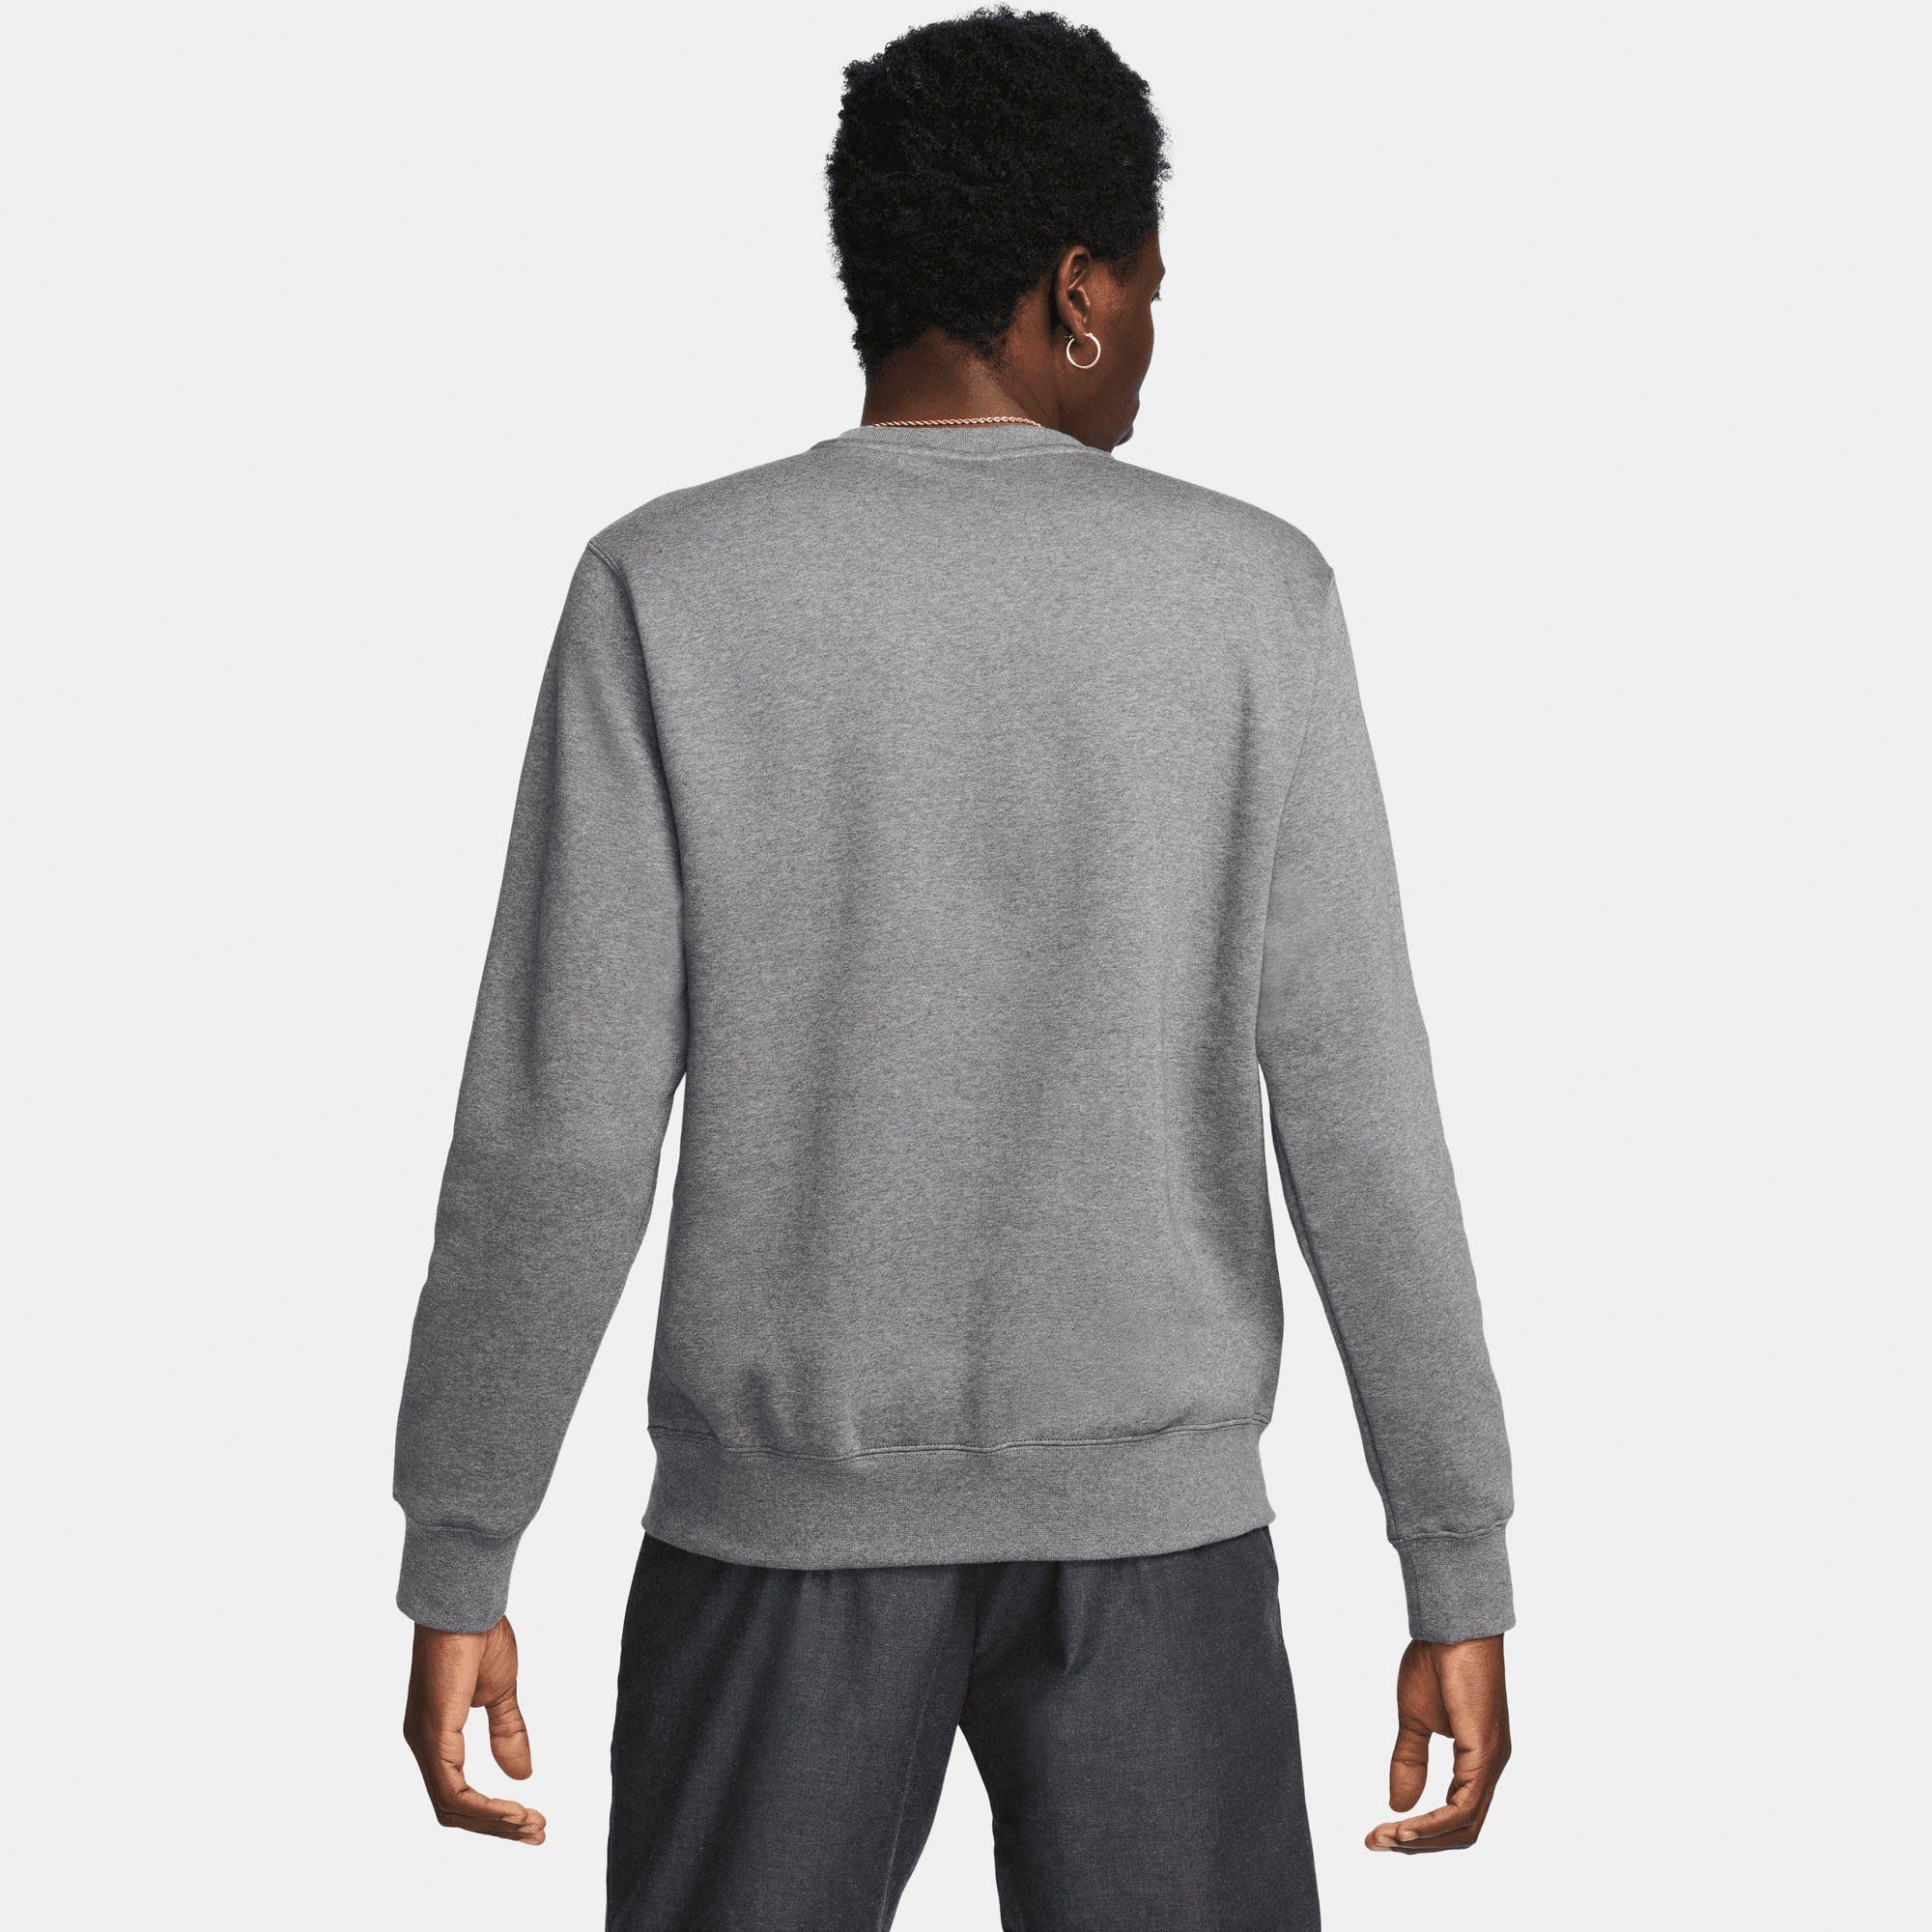 Sweatshirt CHARCOAL Fleece Club HEATHR Sportswear Men's Graphic Crew Nike